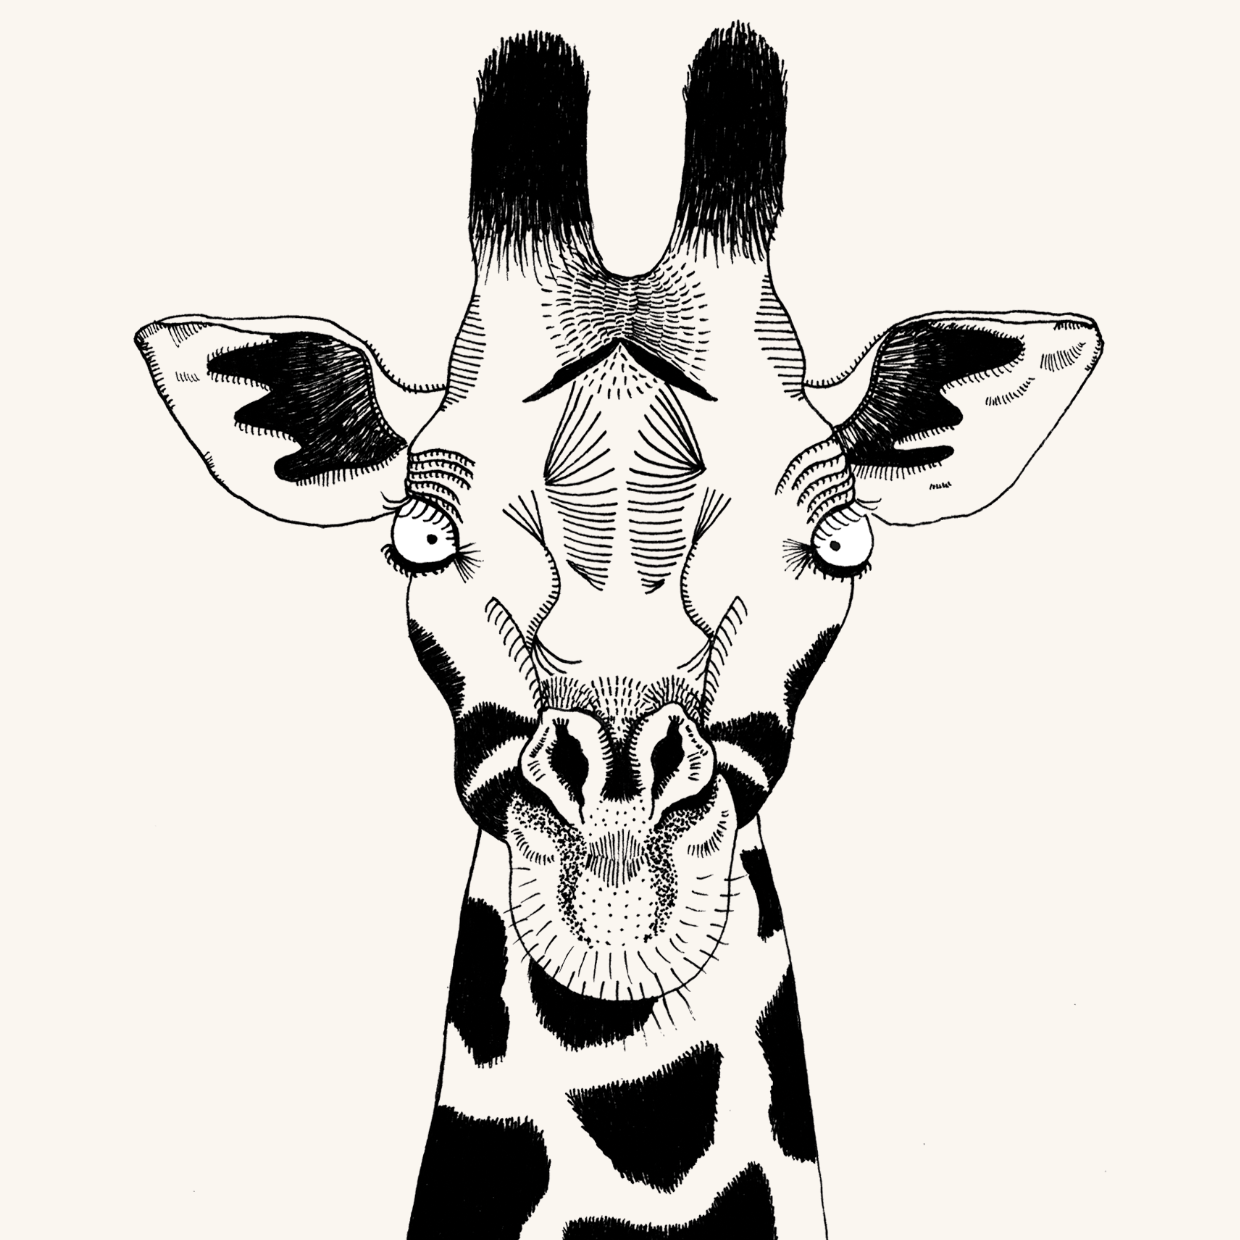 Cheetah and Giraffe people as animals illustrated artwork by Lauren Fowler